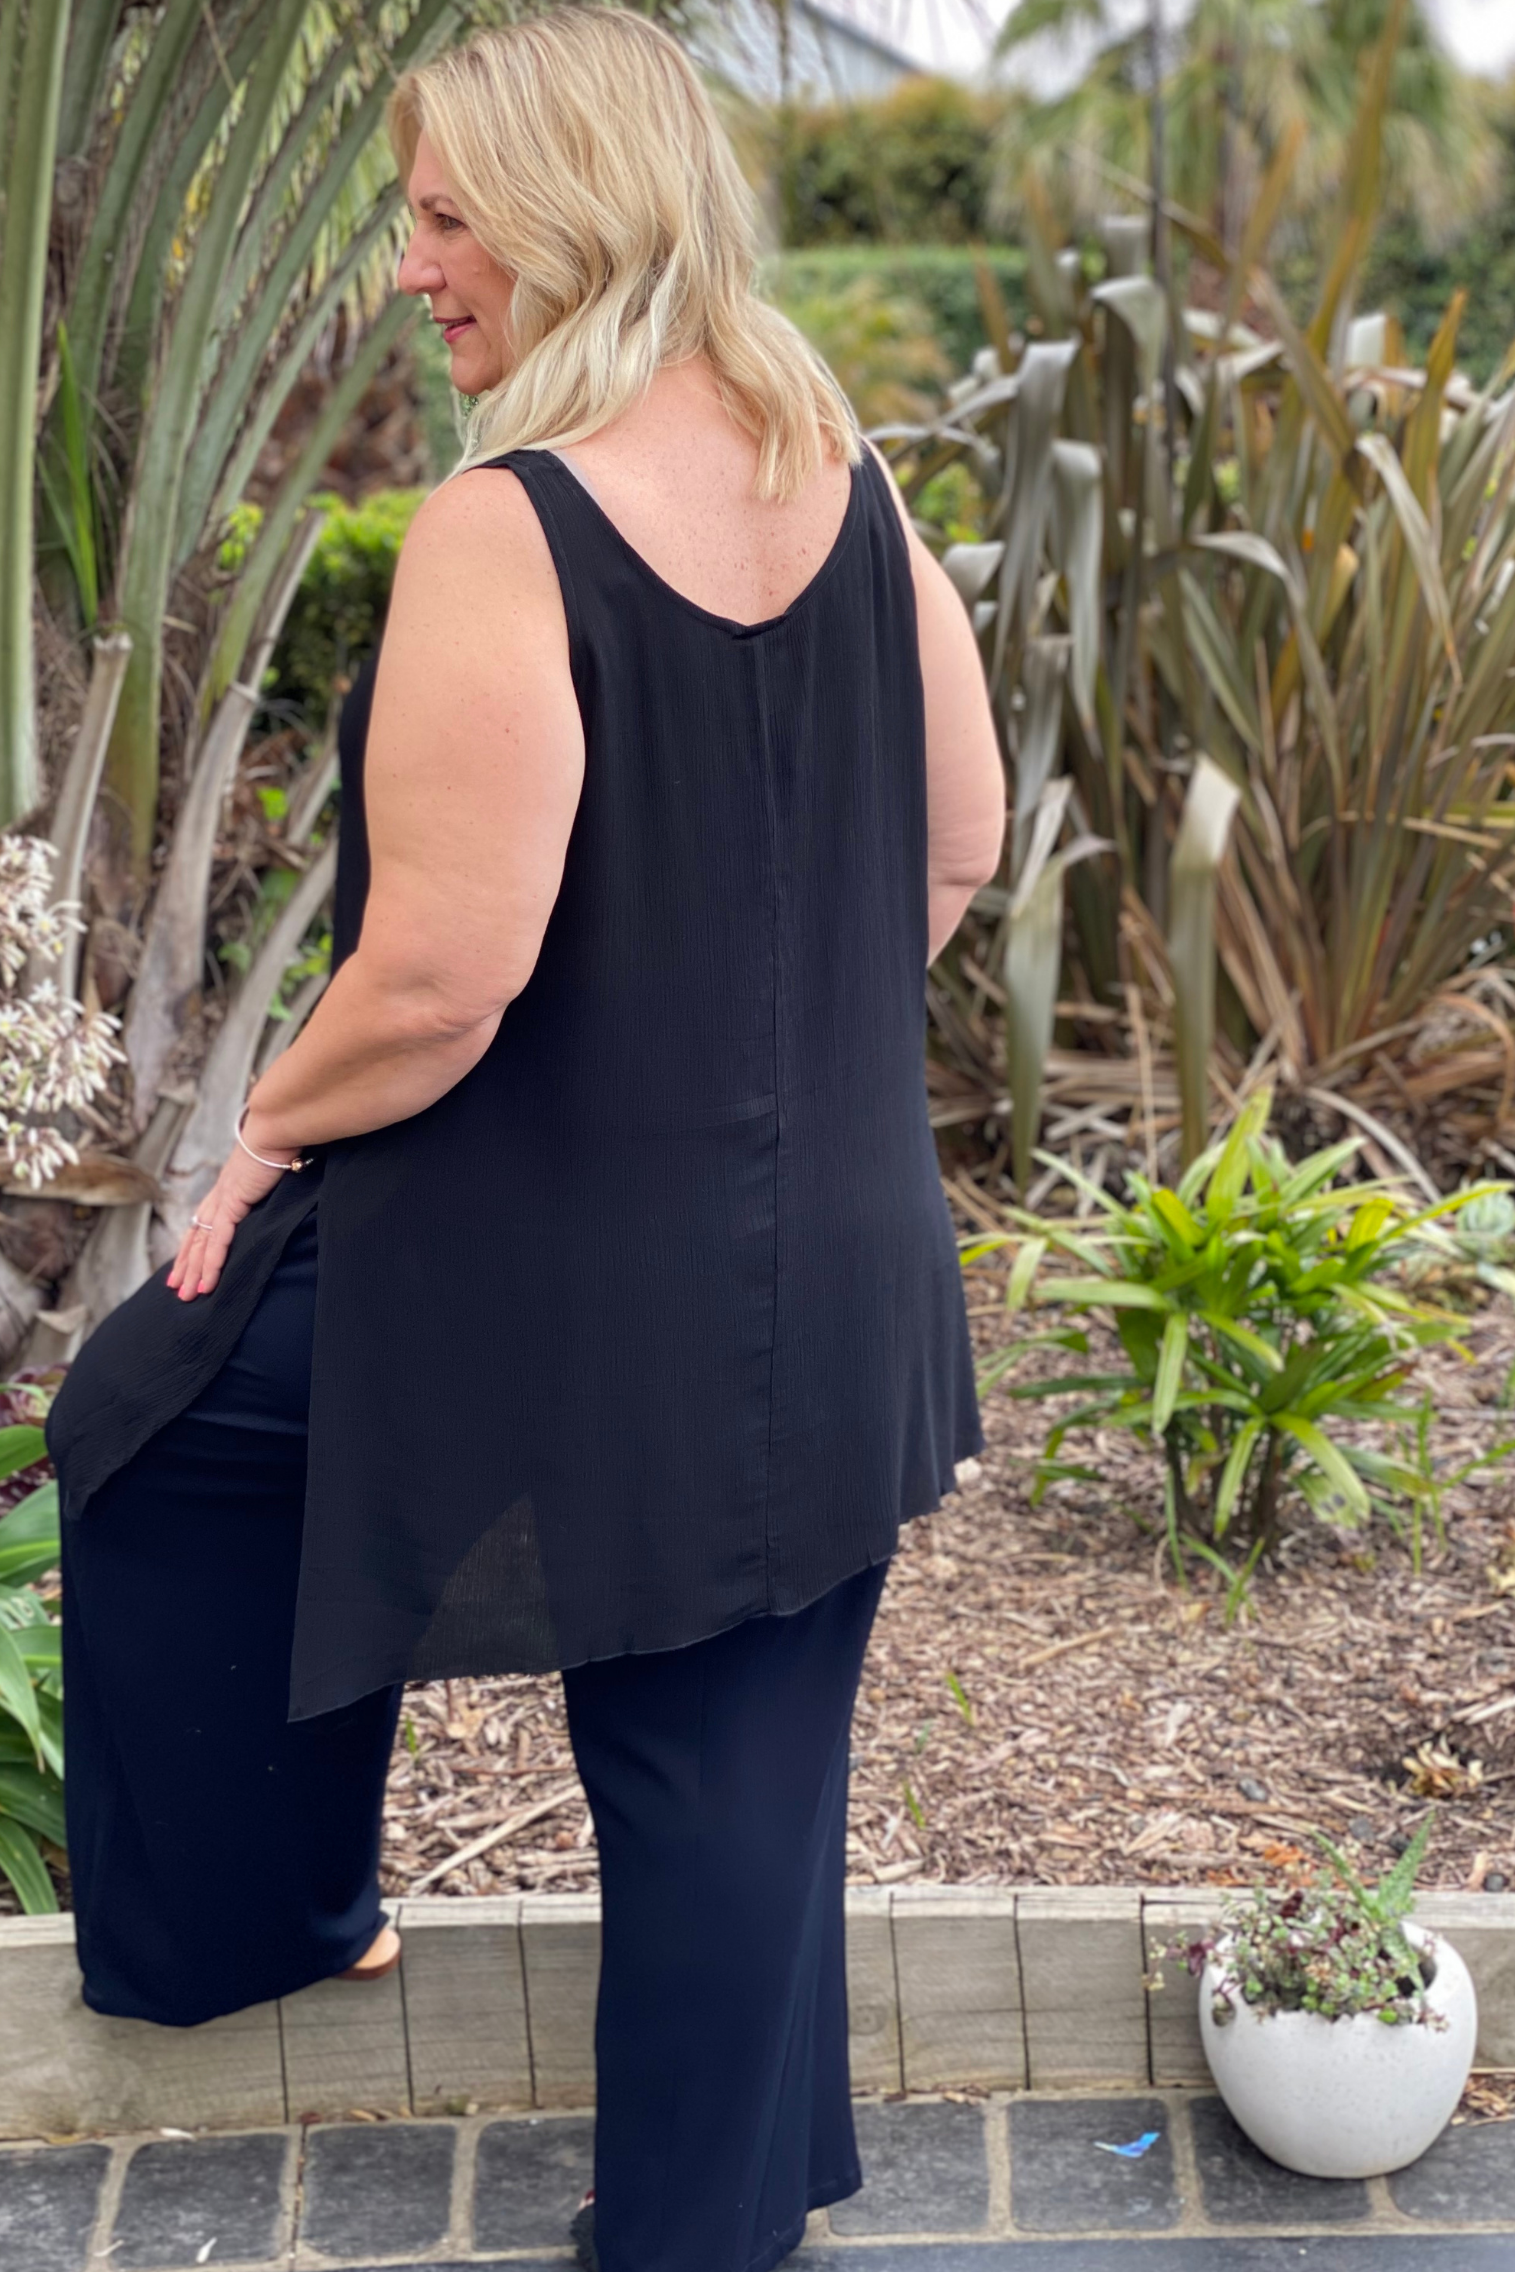 Kita Ku model wearing a black asymmetrical longline cami top over black pants in a garden setting.